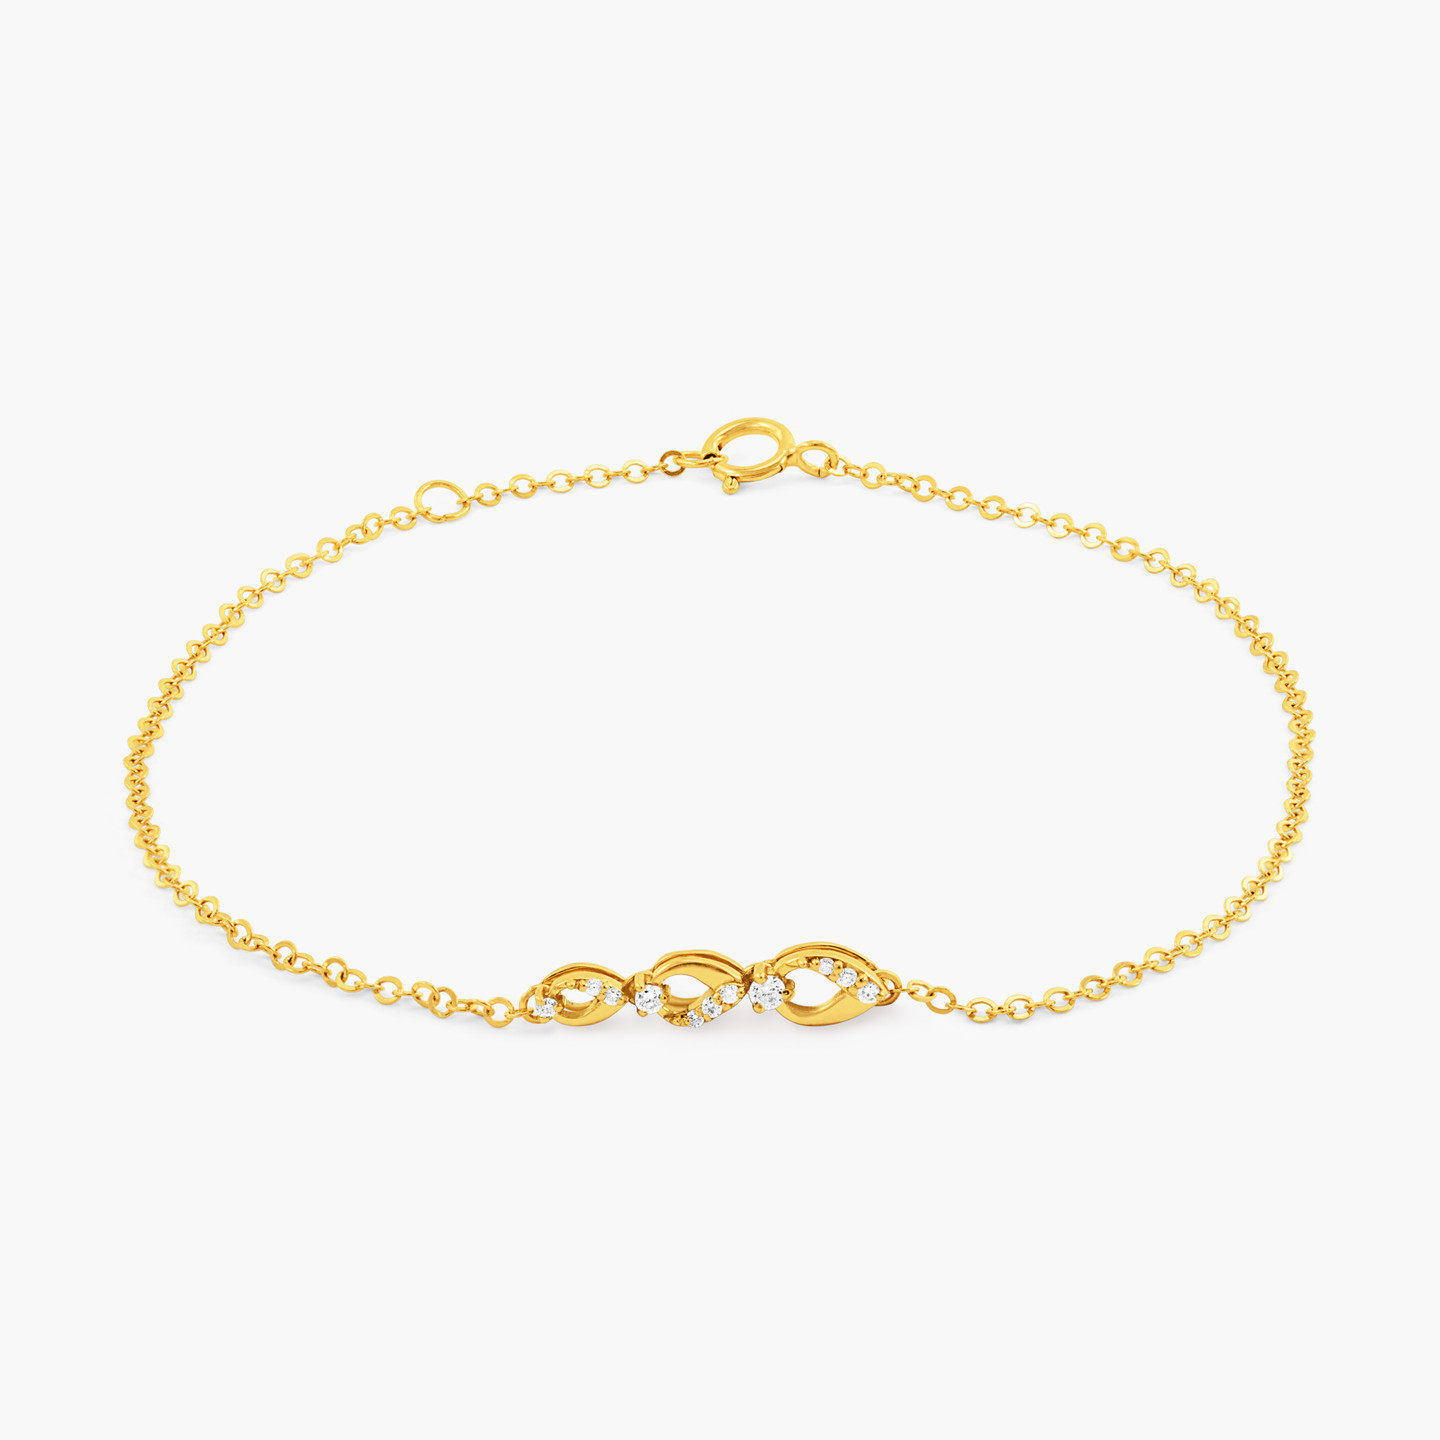 18K Gold Diamond Chain Bracelet - 4